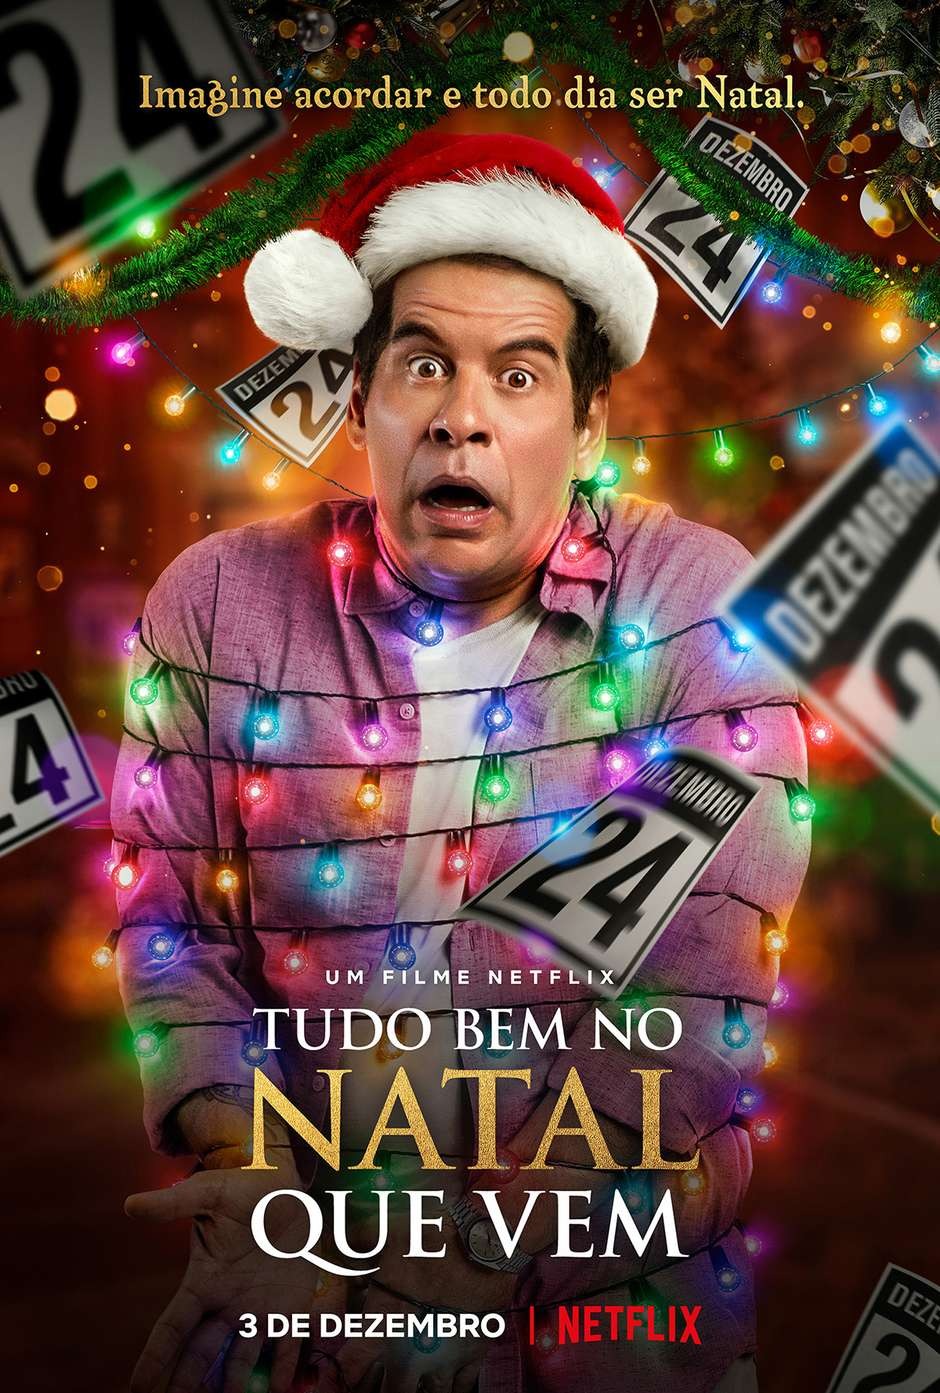 Extra Large TV Poster Image for Tudo Bem No Natal Que Vem 